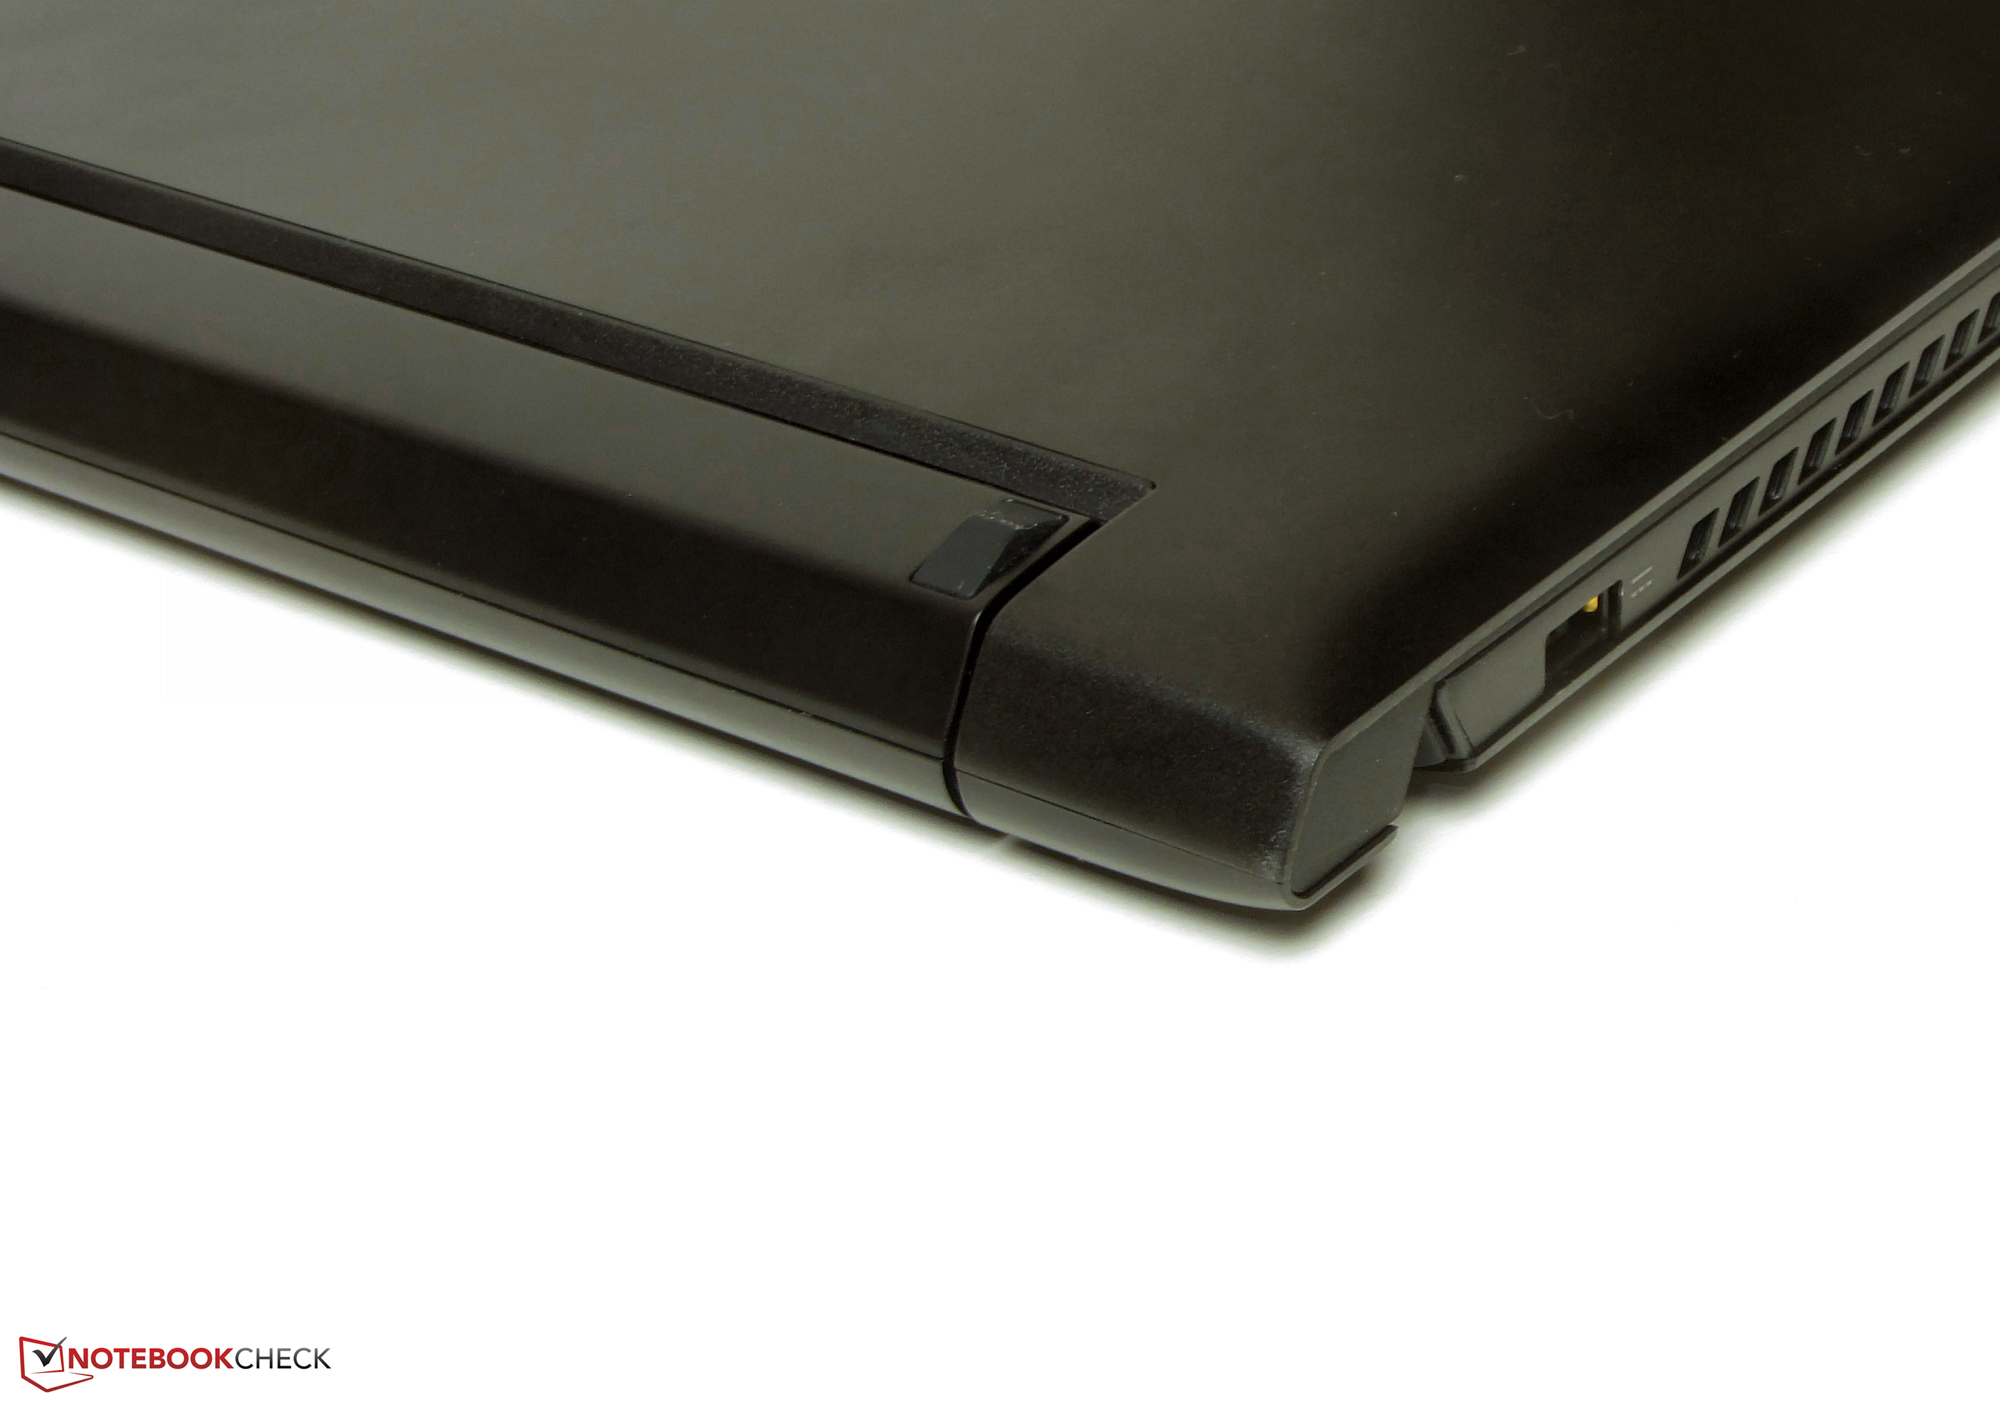 Lenovo Flex 2 Pro 15 Notebook Review - NotebookCheck.net Reviews